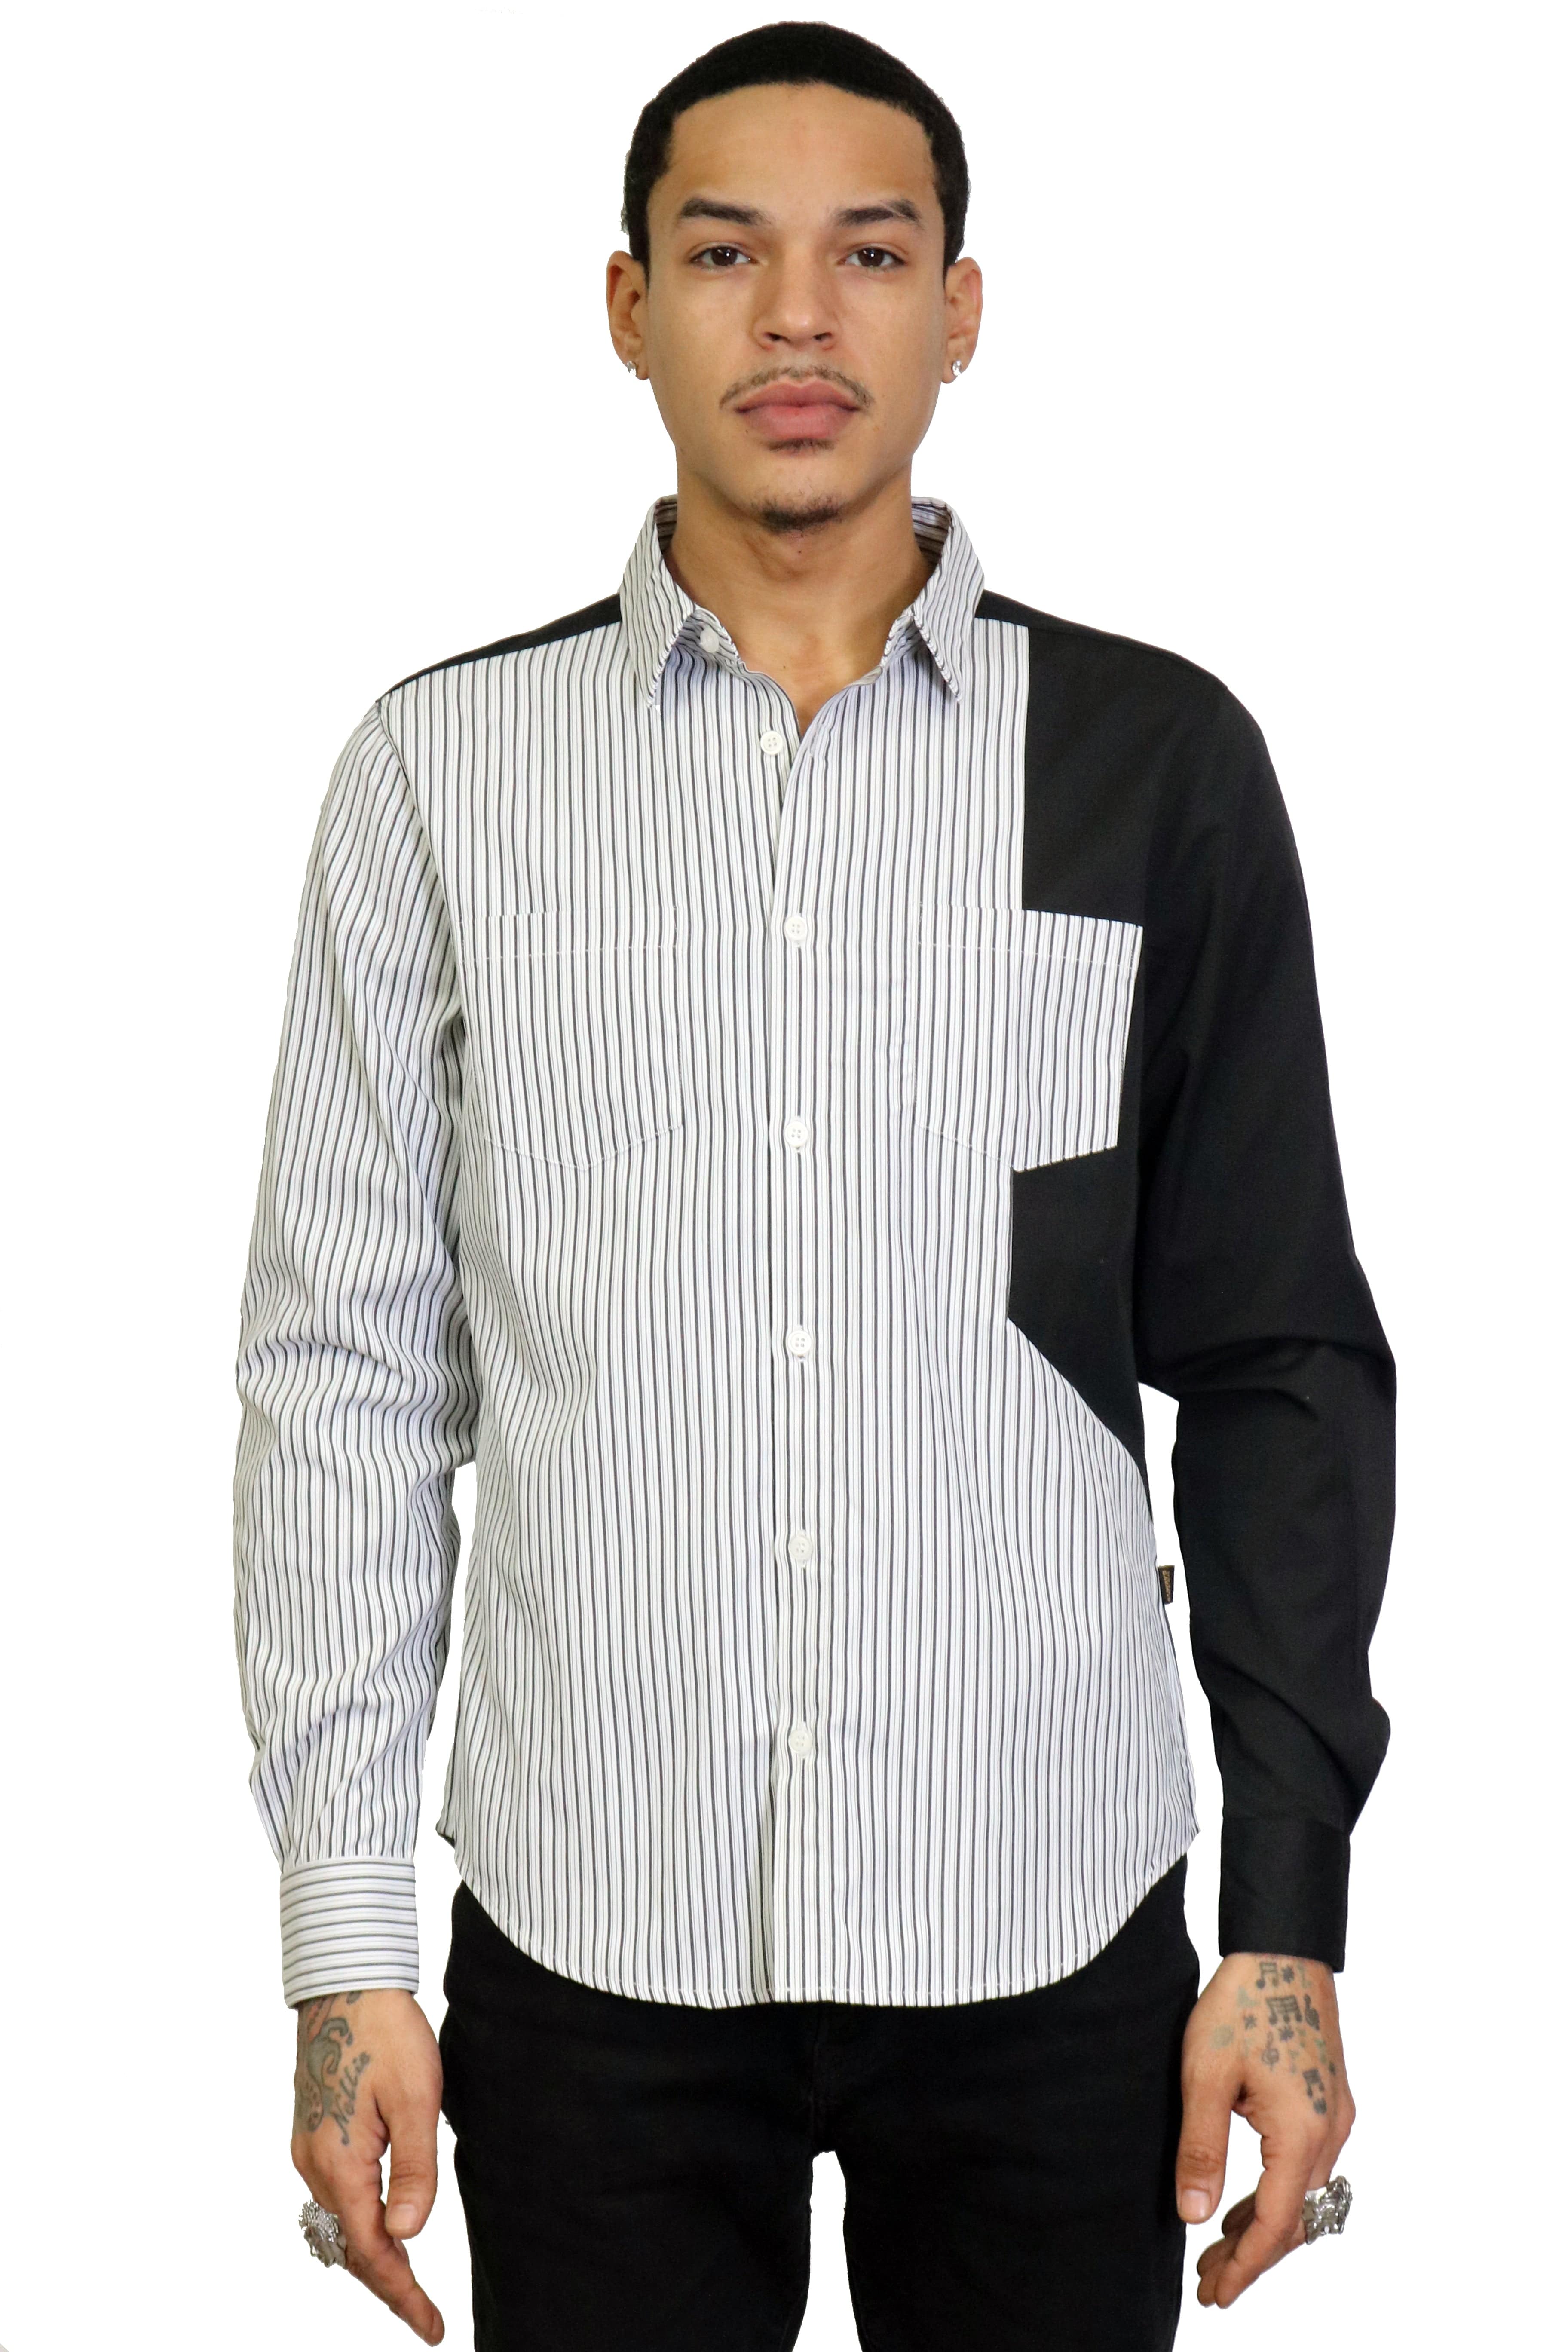 KLEEP Men's Shirt Kao Men's premium pinstripe button down shirt